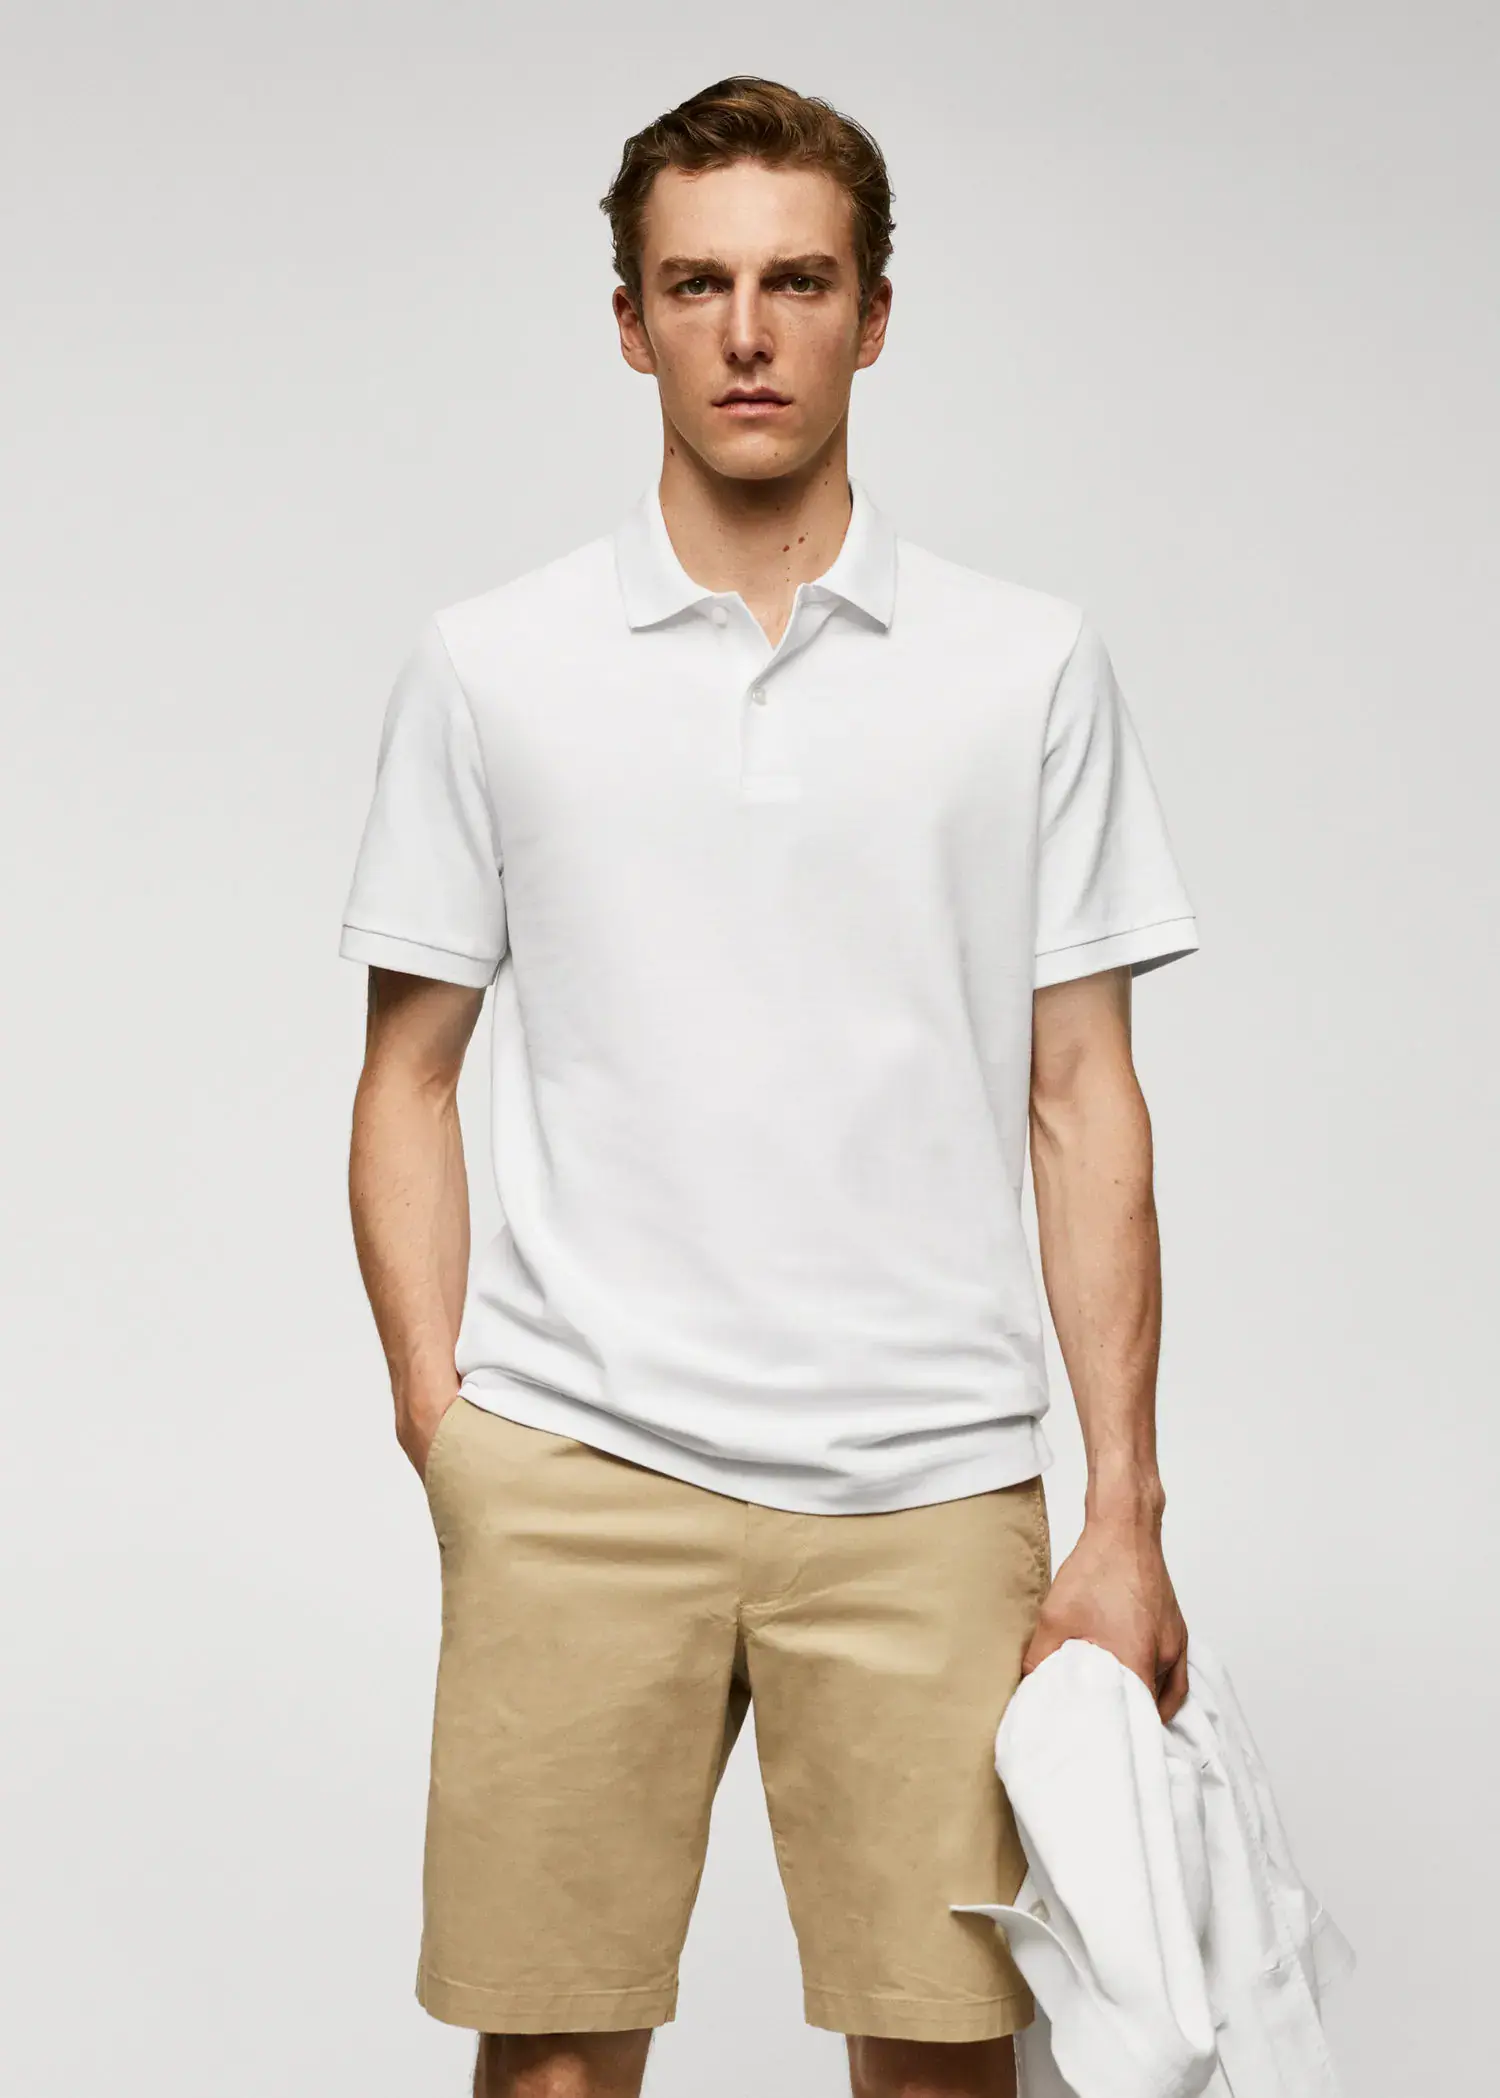 Mango 100% cotton pique polo shirt. a man in a white polo shirt holding a hat. 